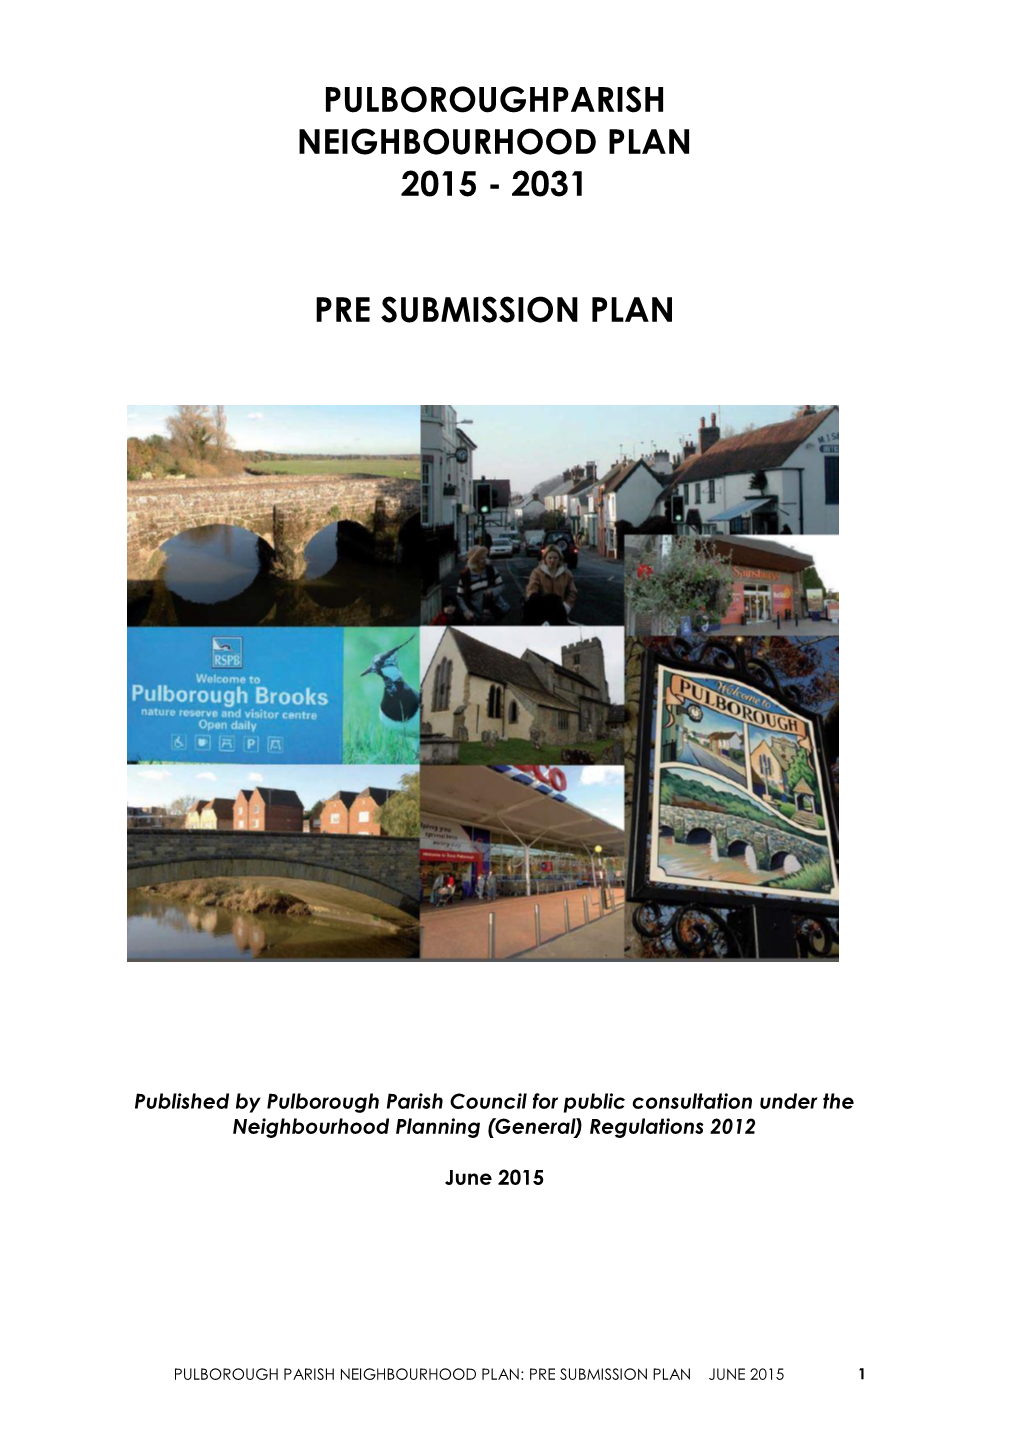 Pulboroughparish Neighbourhood Plan 2015 - 2031